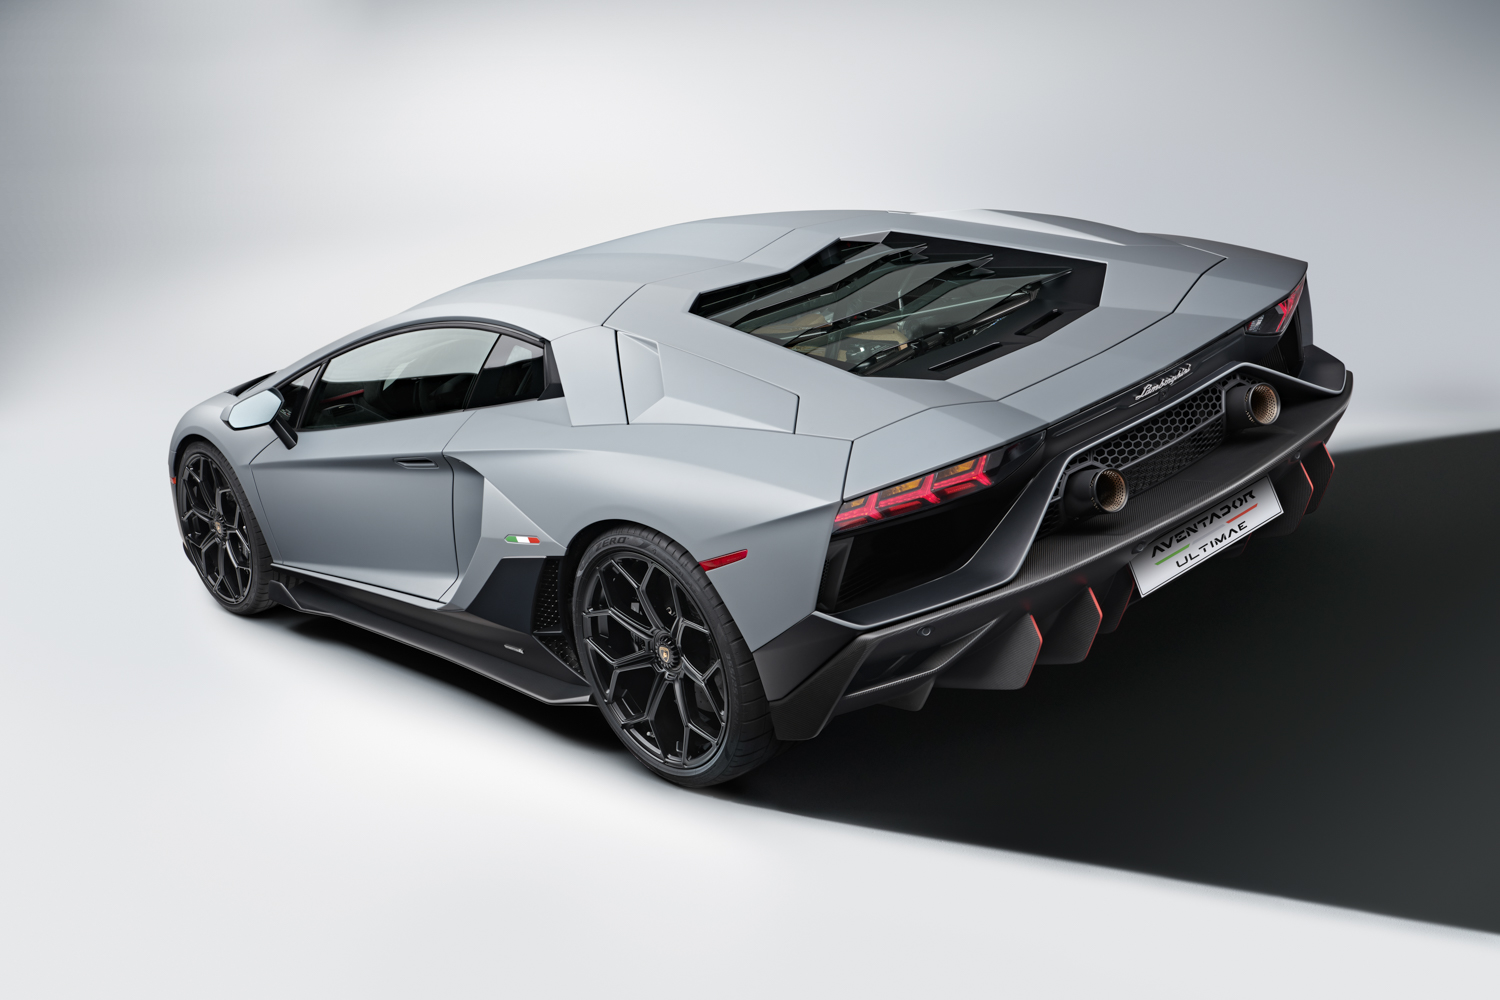 Lamborghini launches its last Aventador